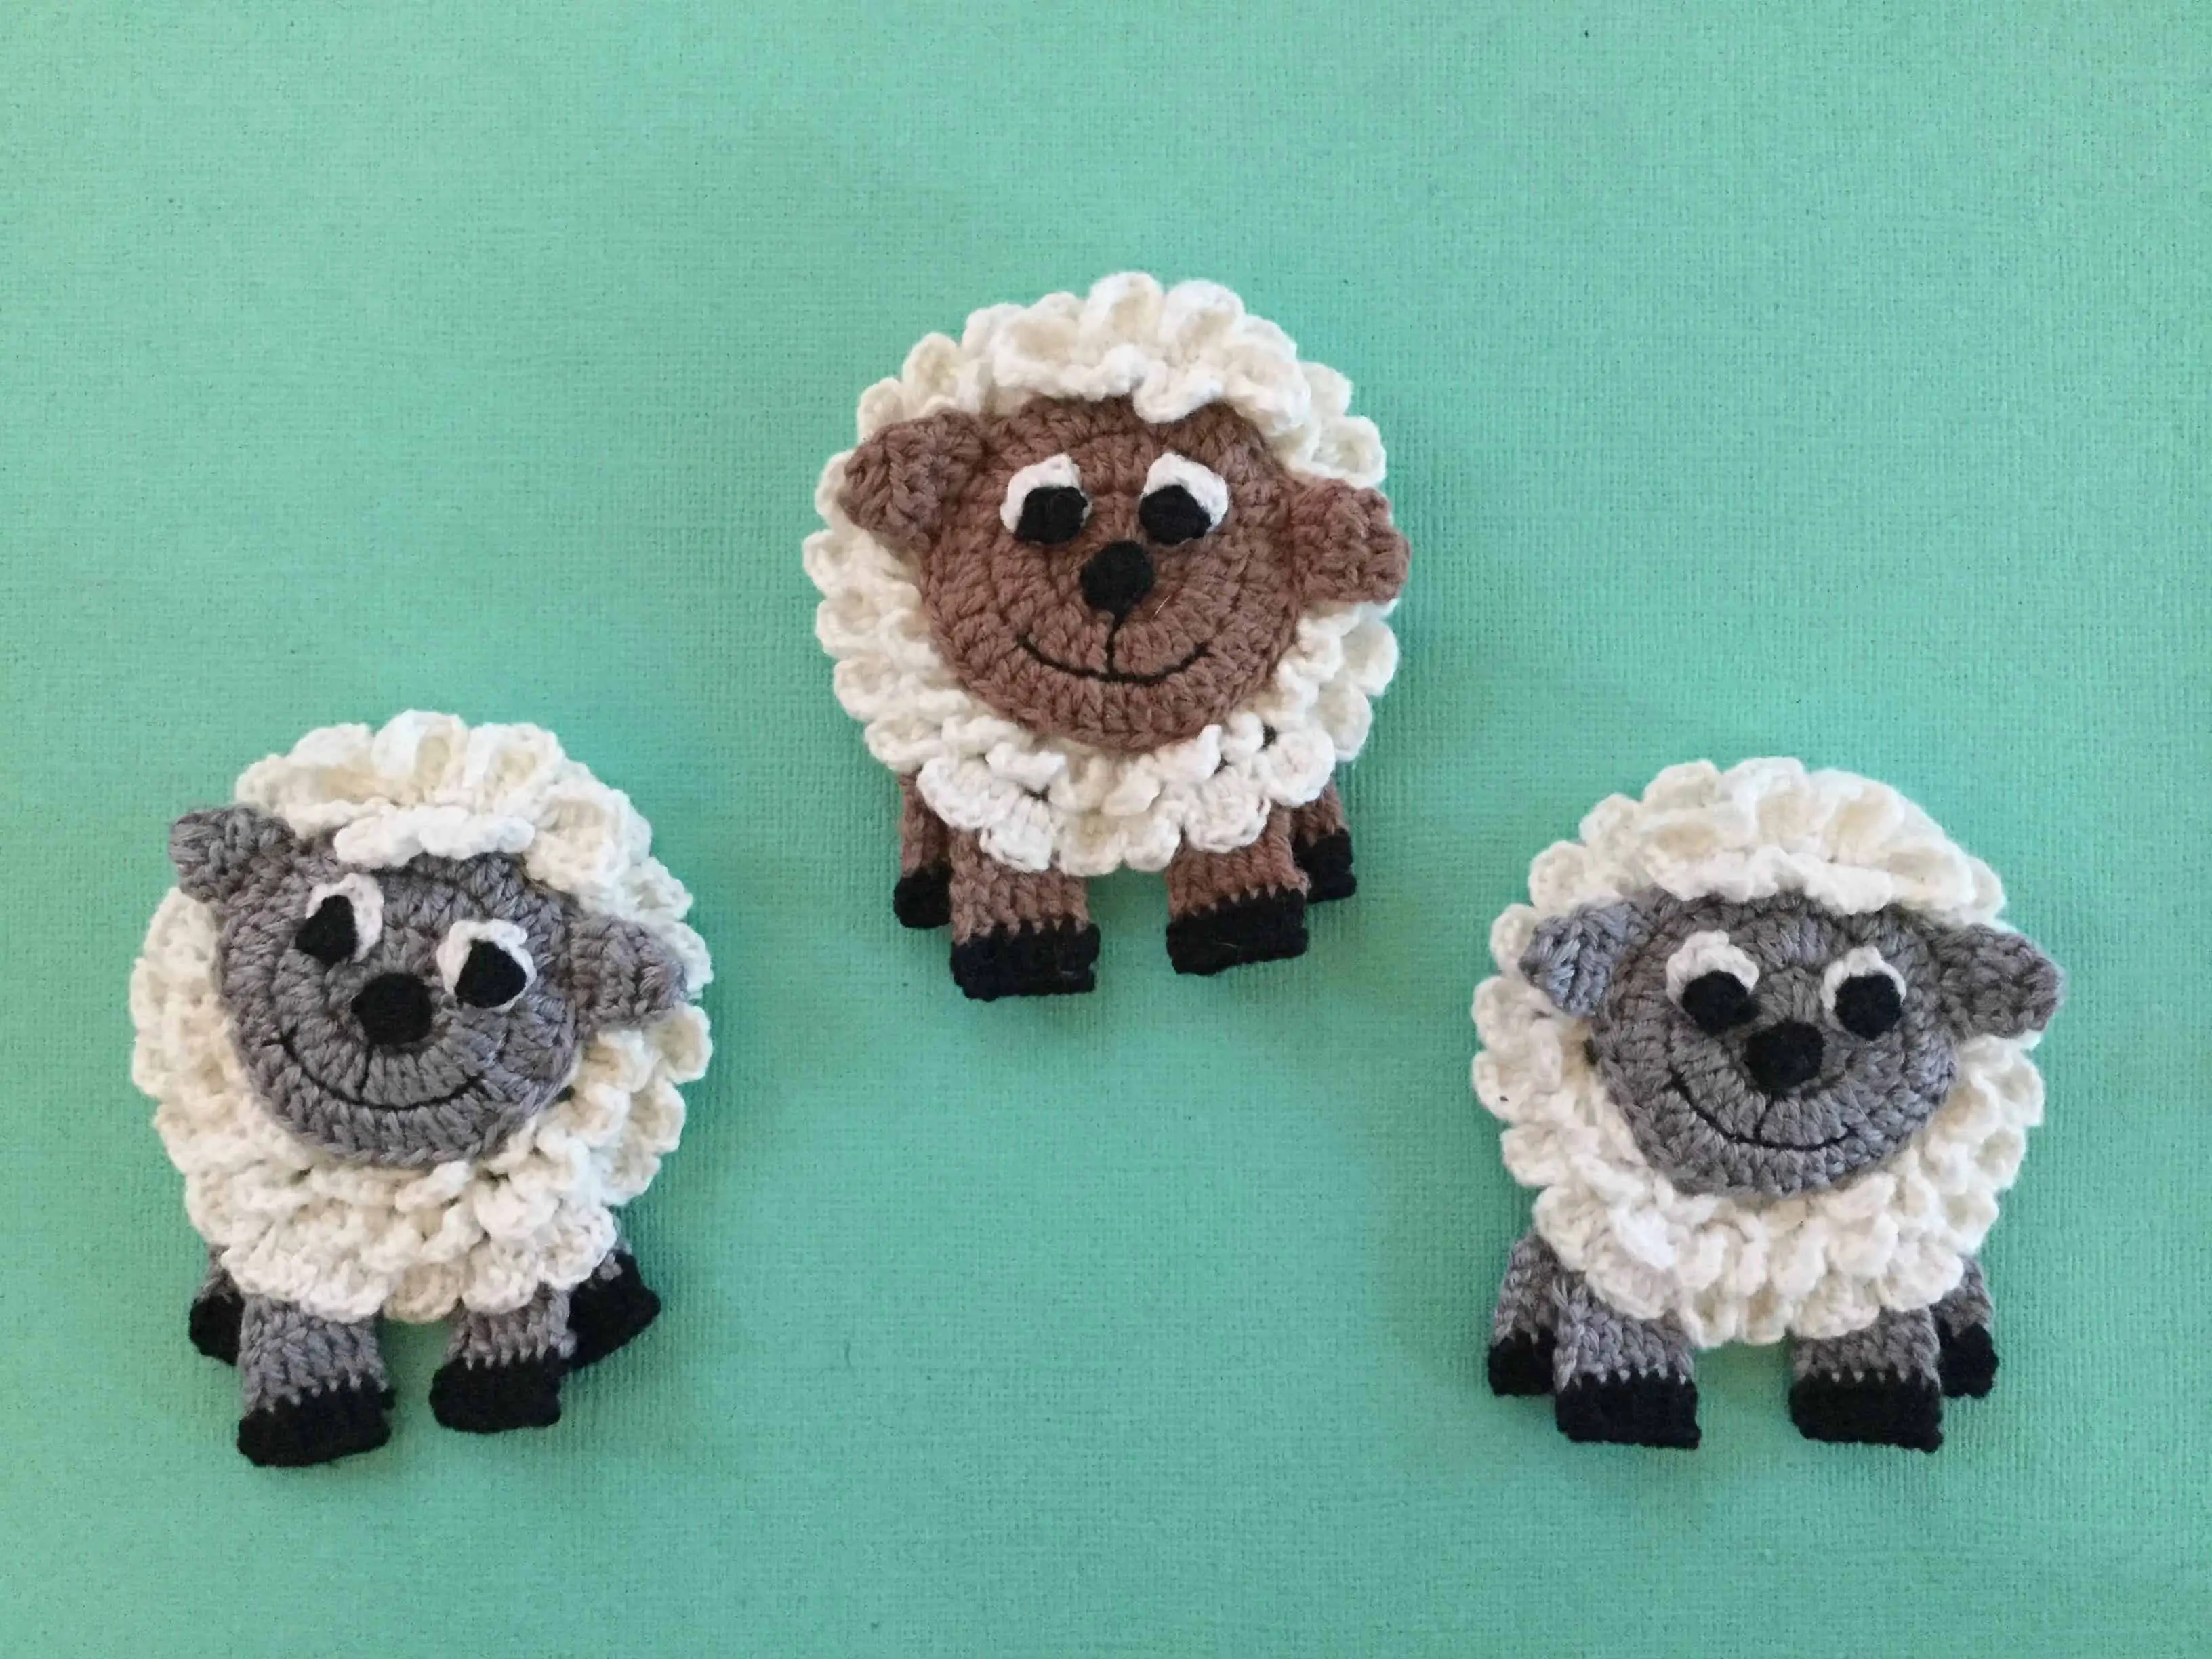 Finished crochet sheep group landscape